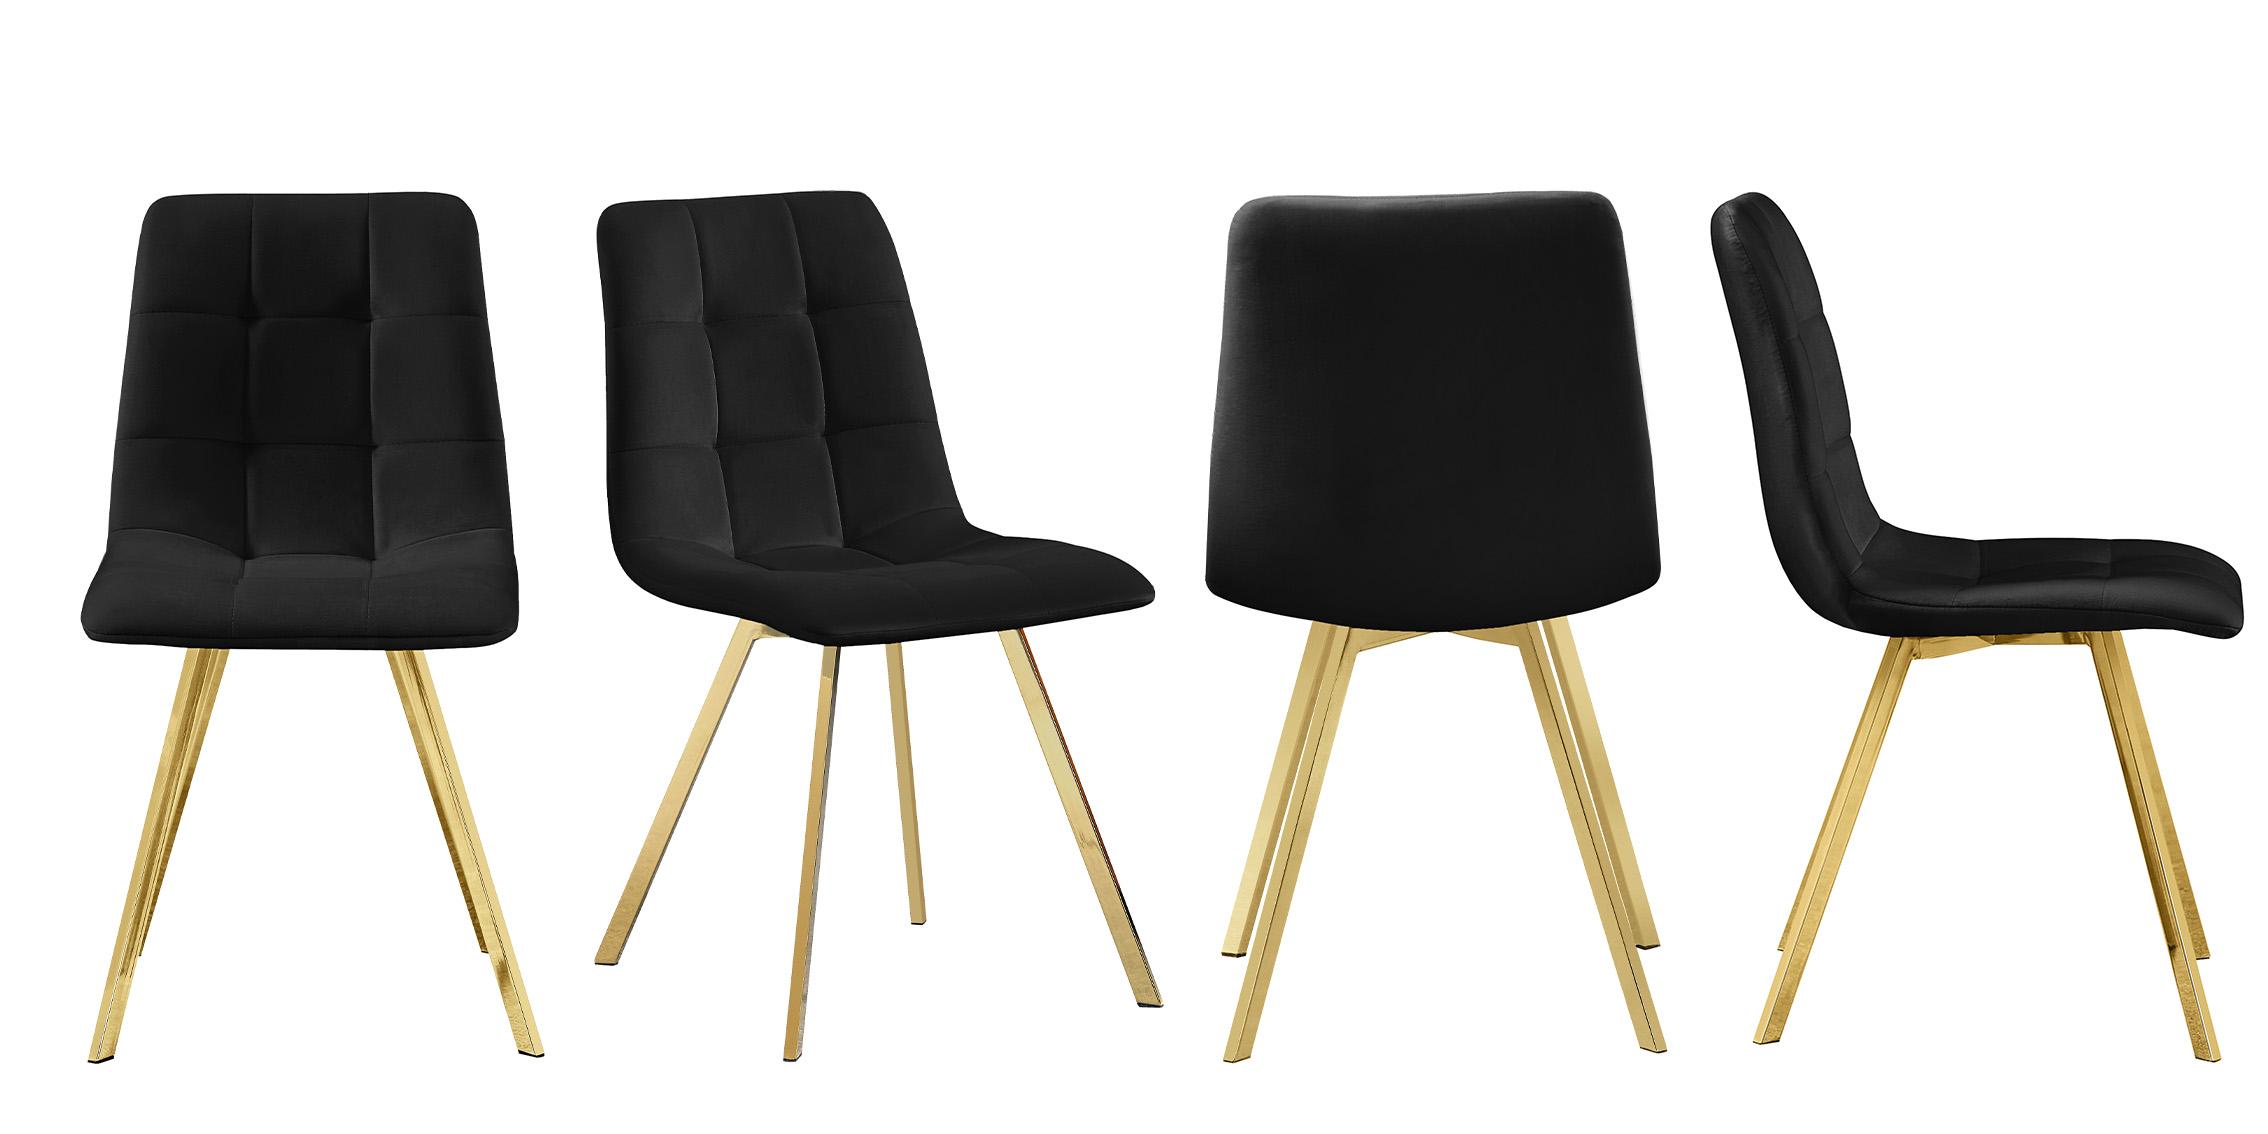 Contemporary, Modern Dining Chair Set ANNIE 979Black-C 979Black-C-Set-4 in Gold, Black 